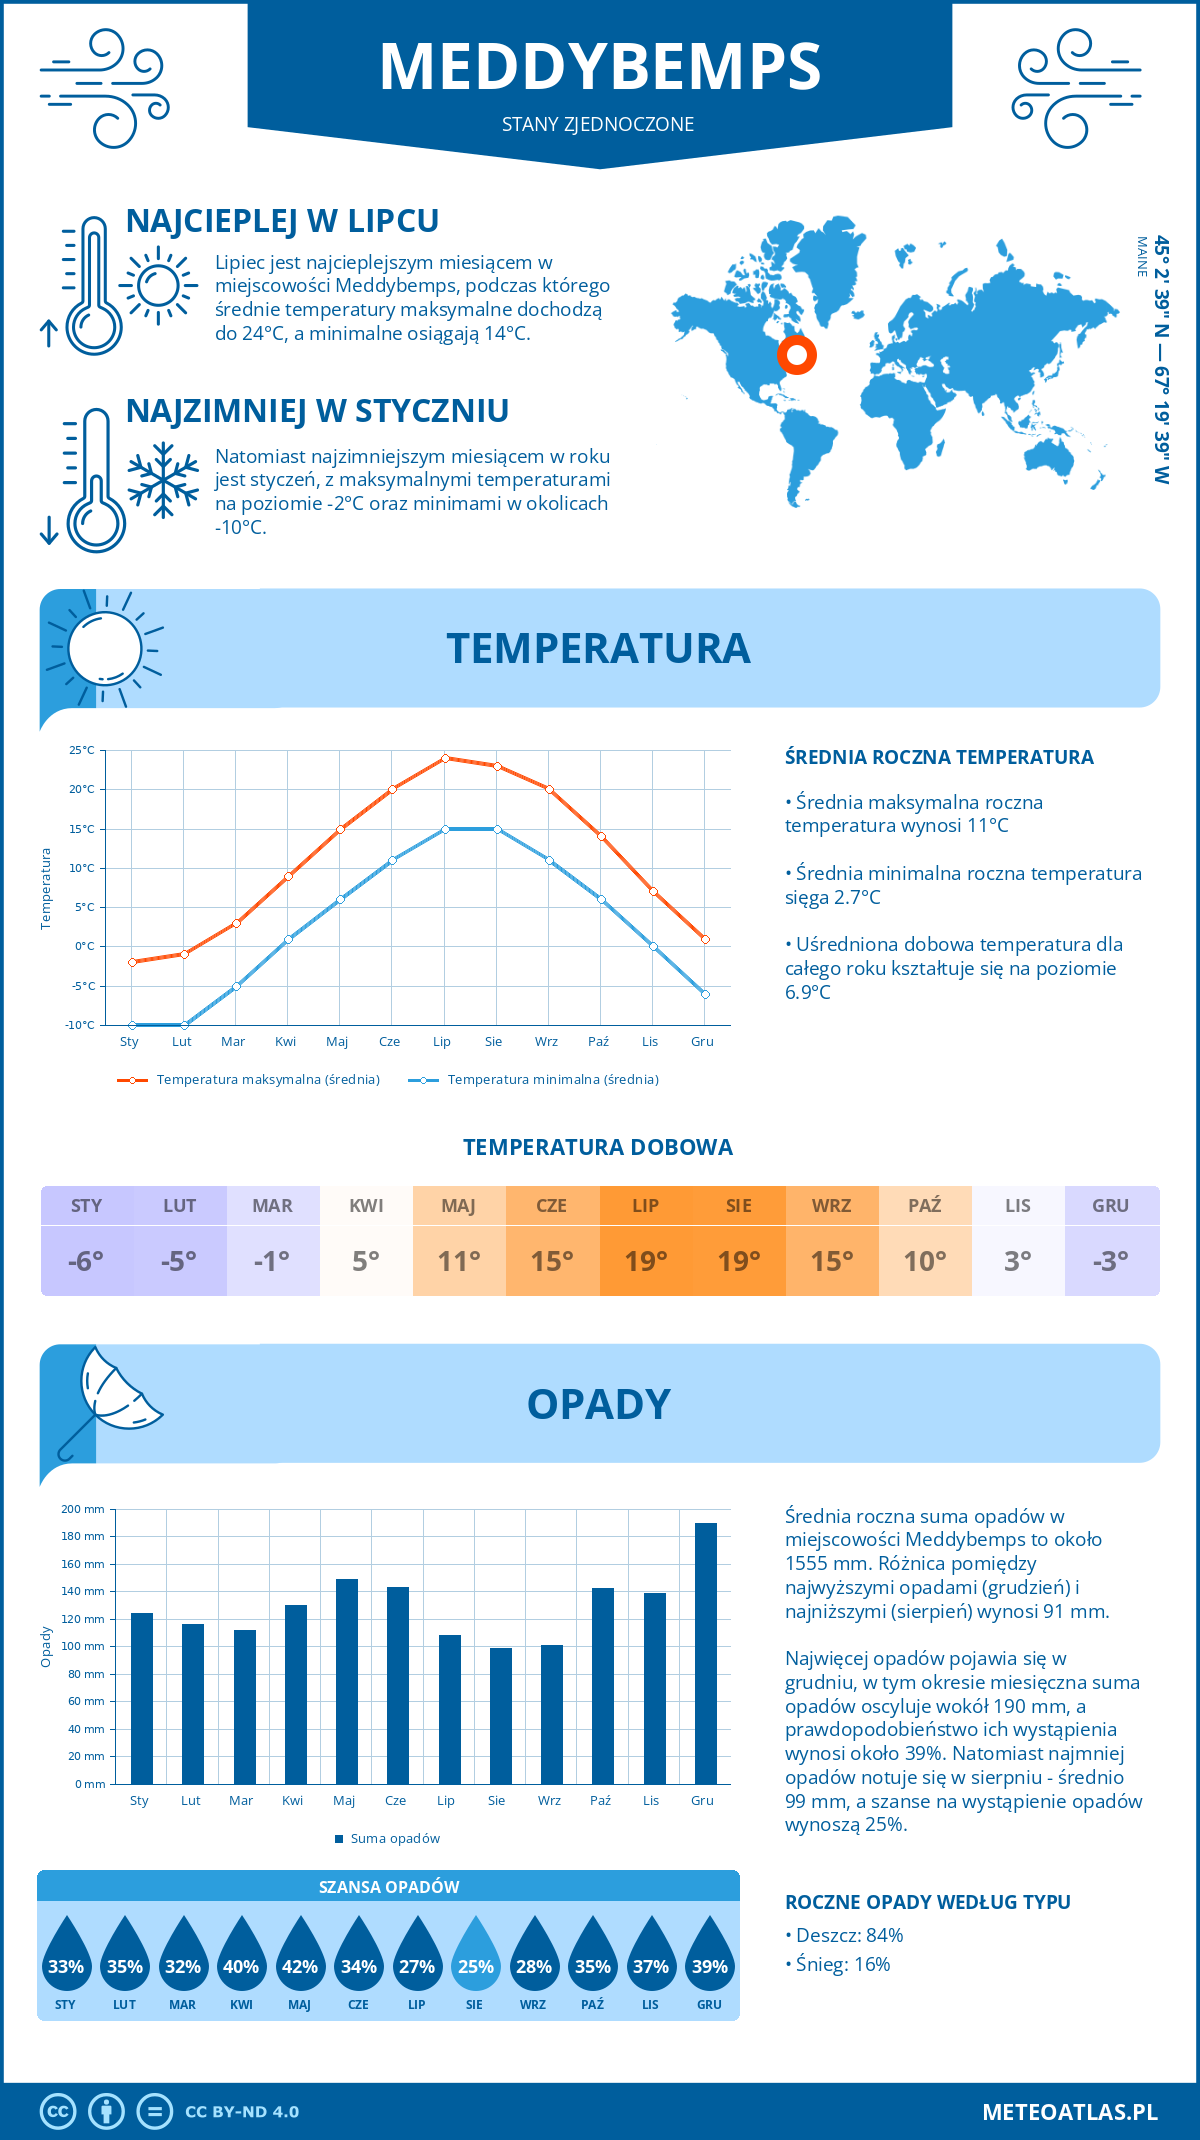 Pogoda Meddybemps (Stany Zjednoczone). Temperatura oraz opady.